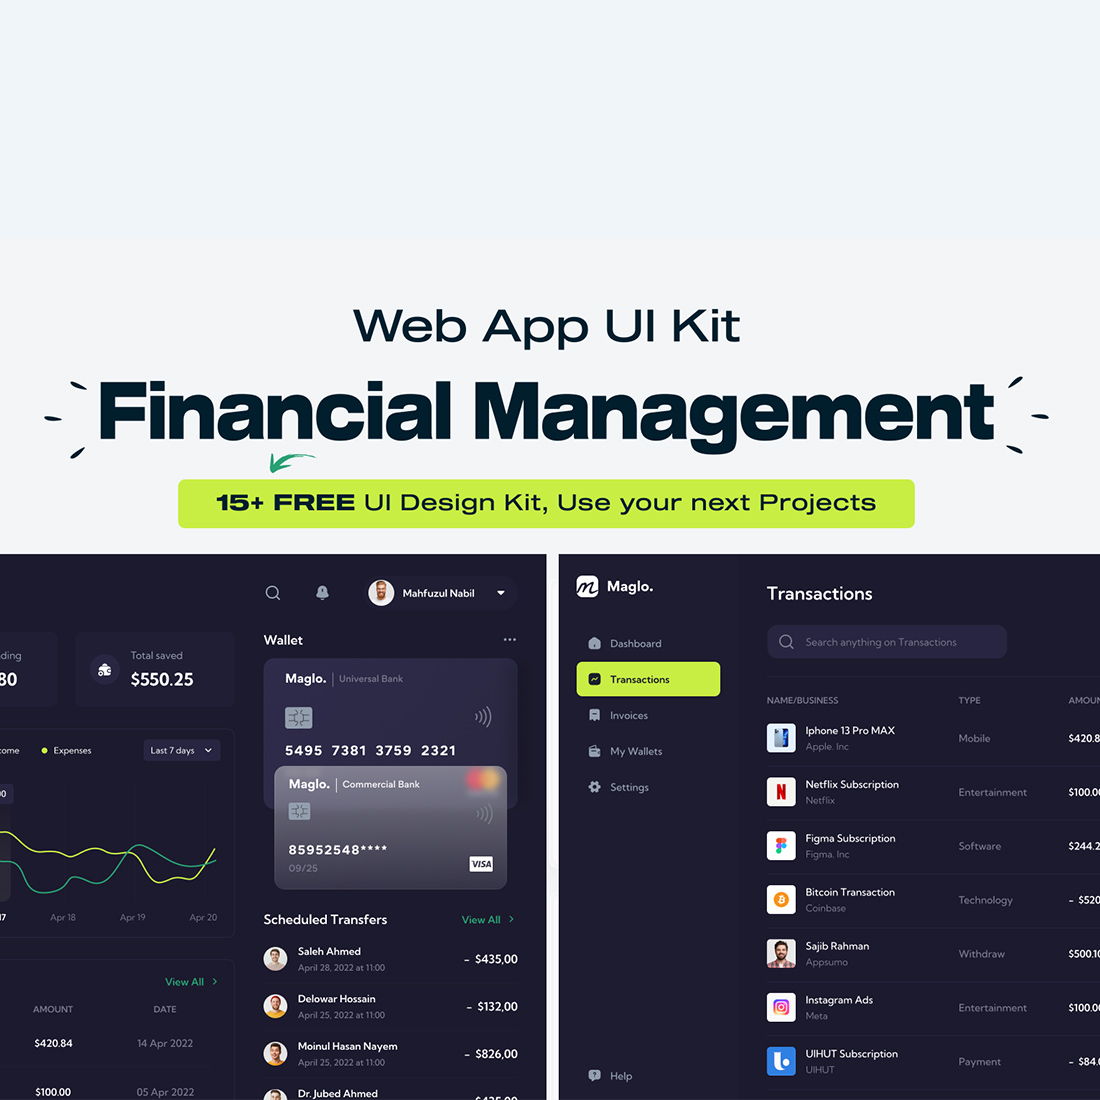 Web App UI Kit Financial Management cover image.